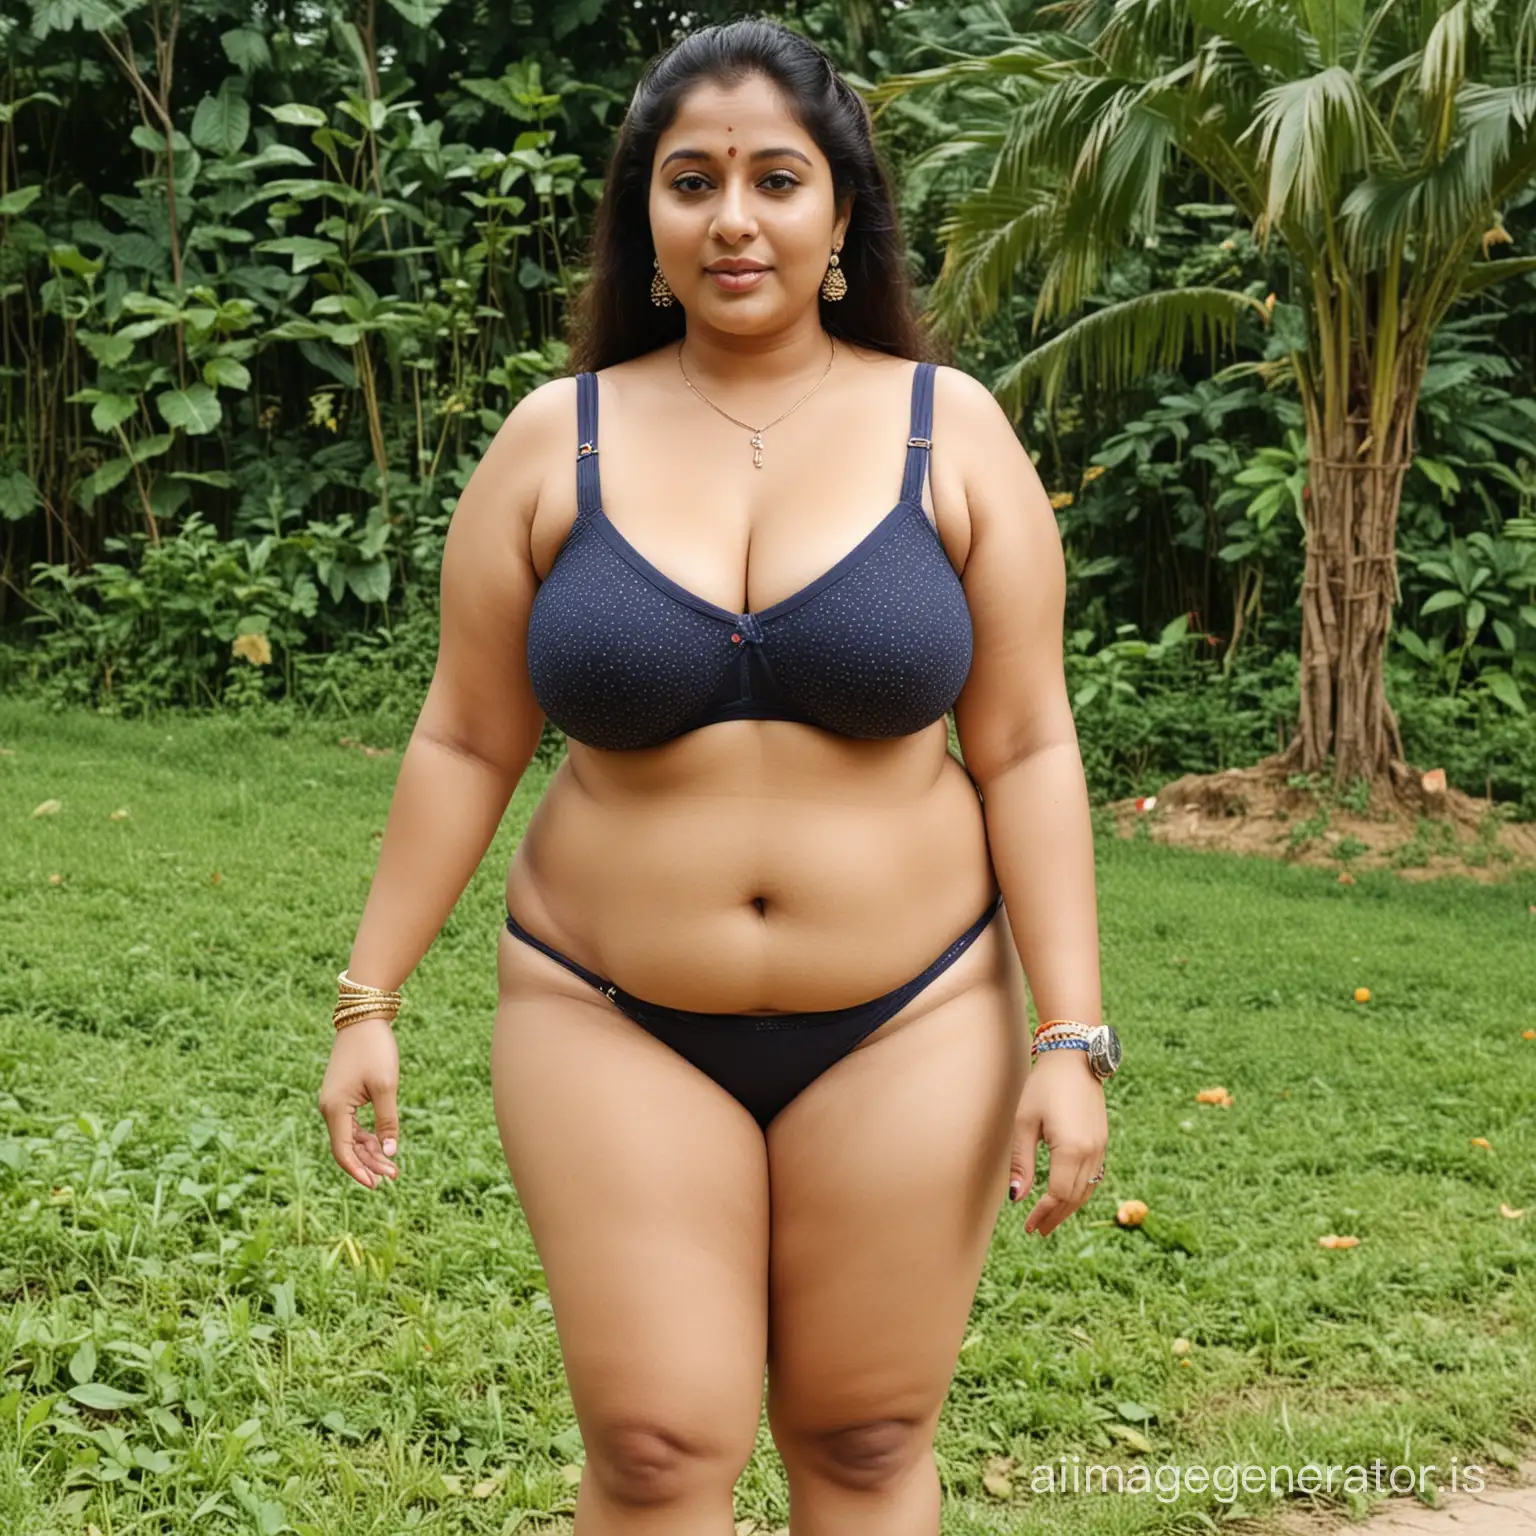 Bengali-Village-Aunt-with-Curvy-Figure-Embracing-Body-Positivity